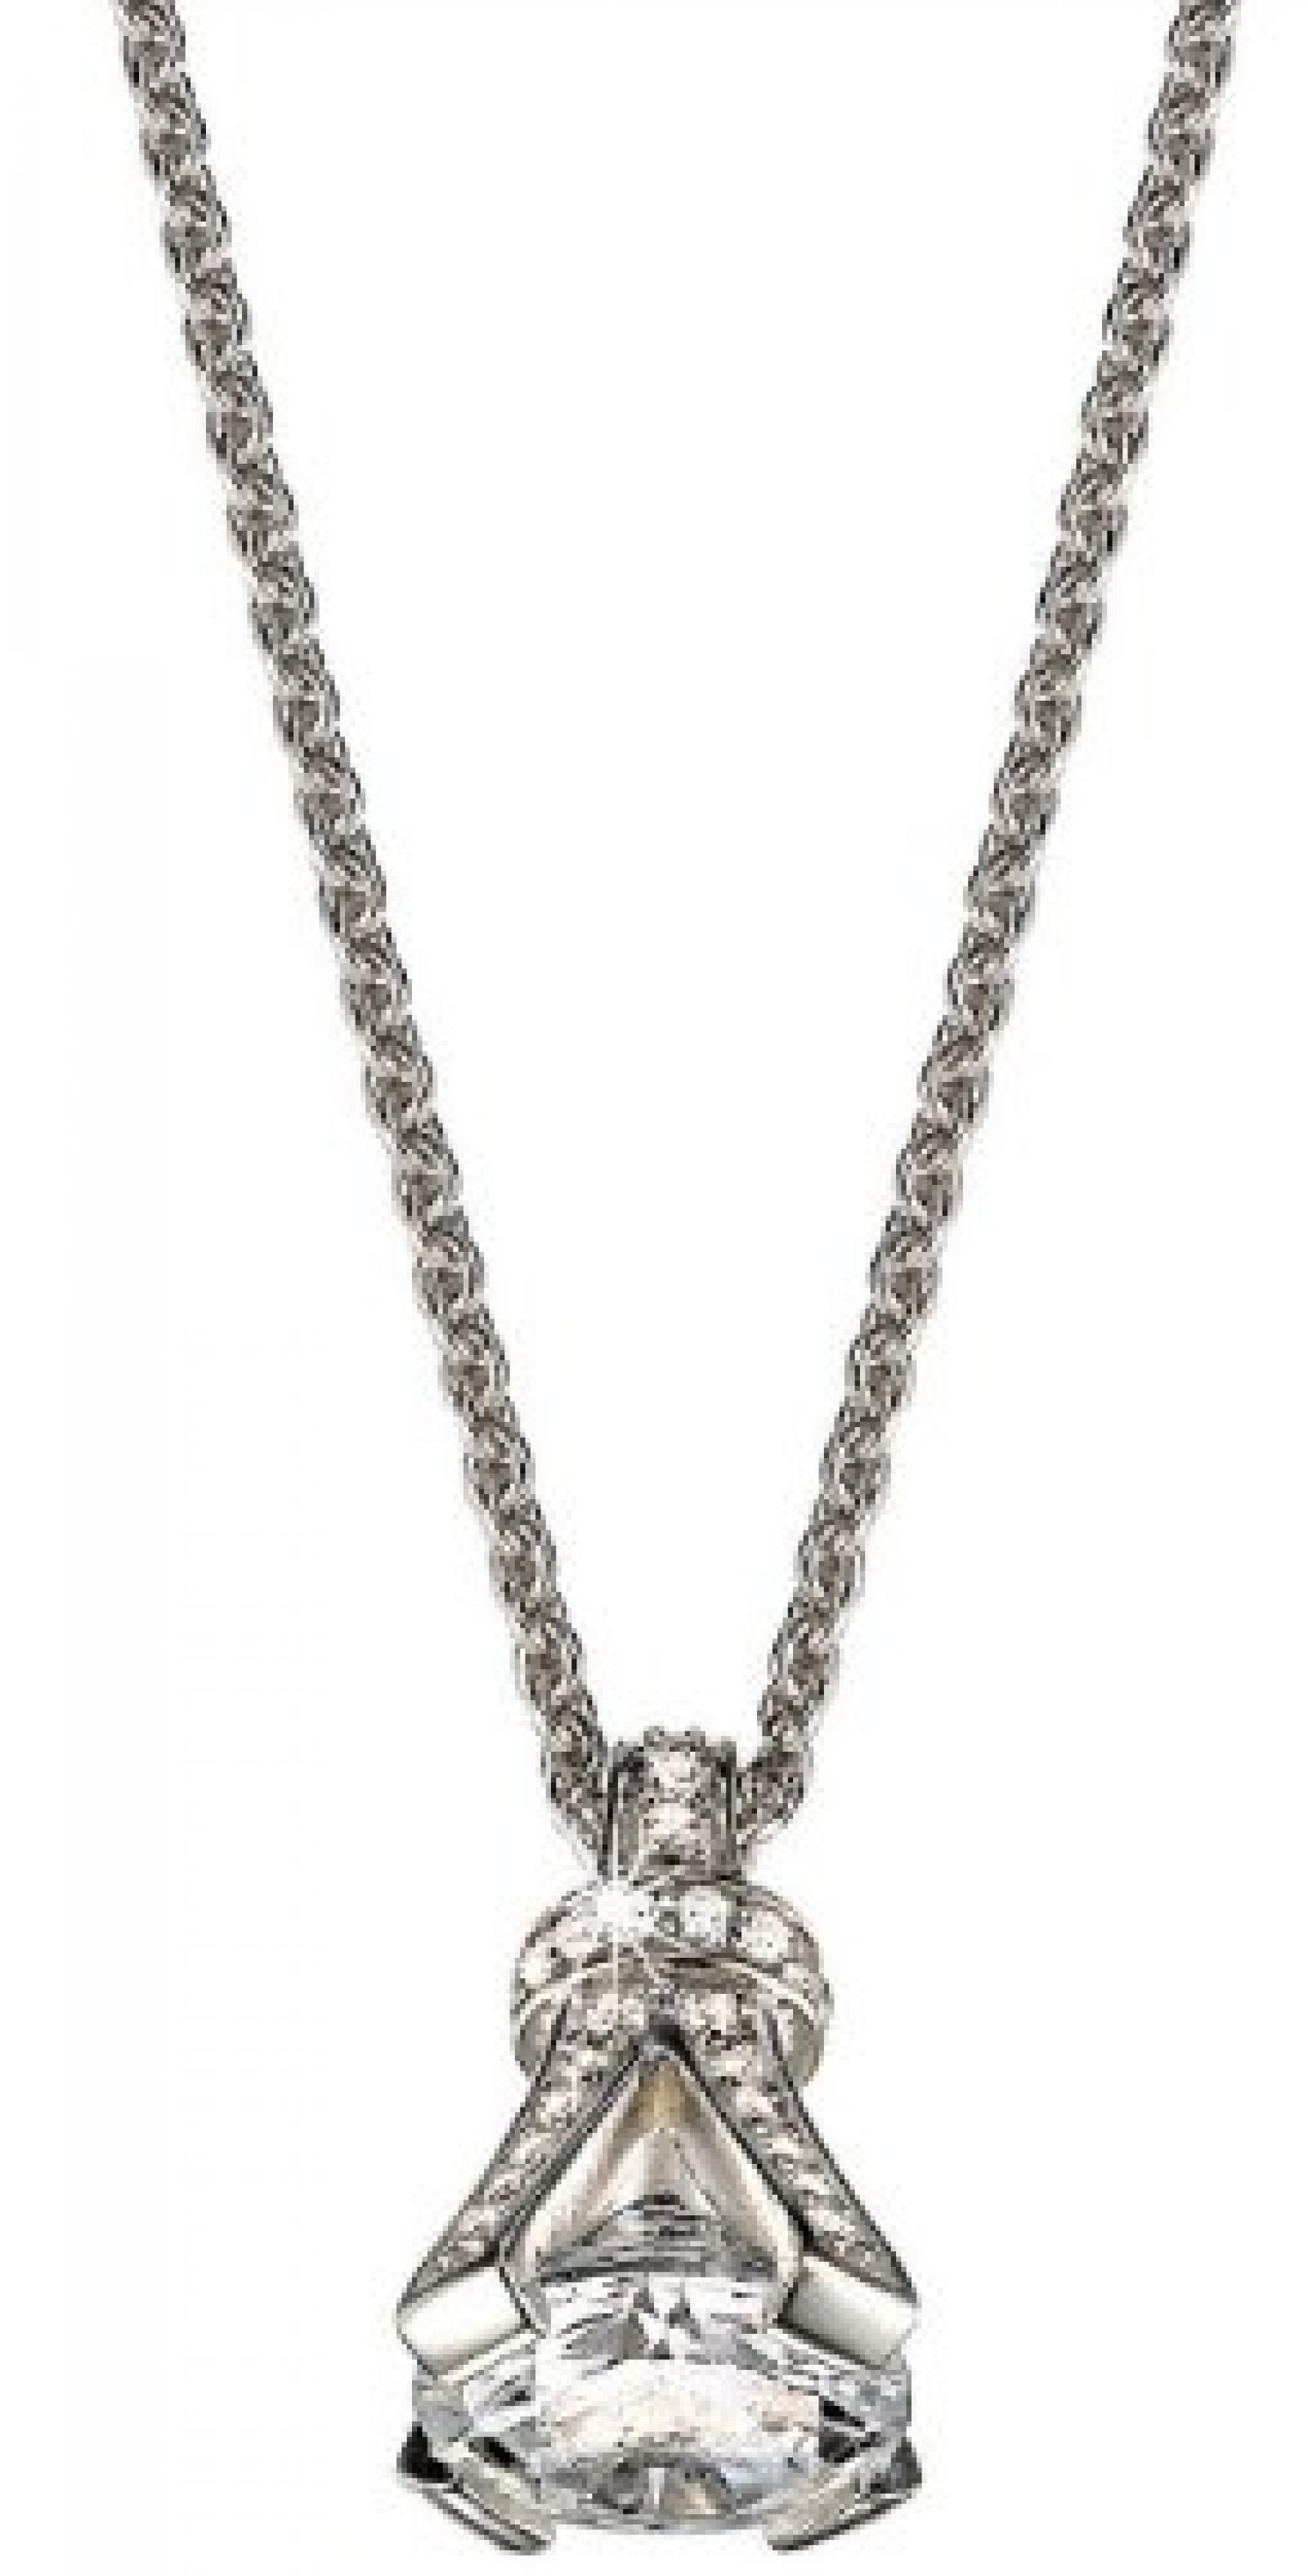 Pierre Cardin Damen Halskette 925 Sterling Silber rhodiniert Kristall Zirkonia Romance 42 cm weiß PCNL90410A420 